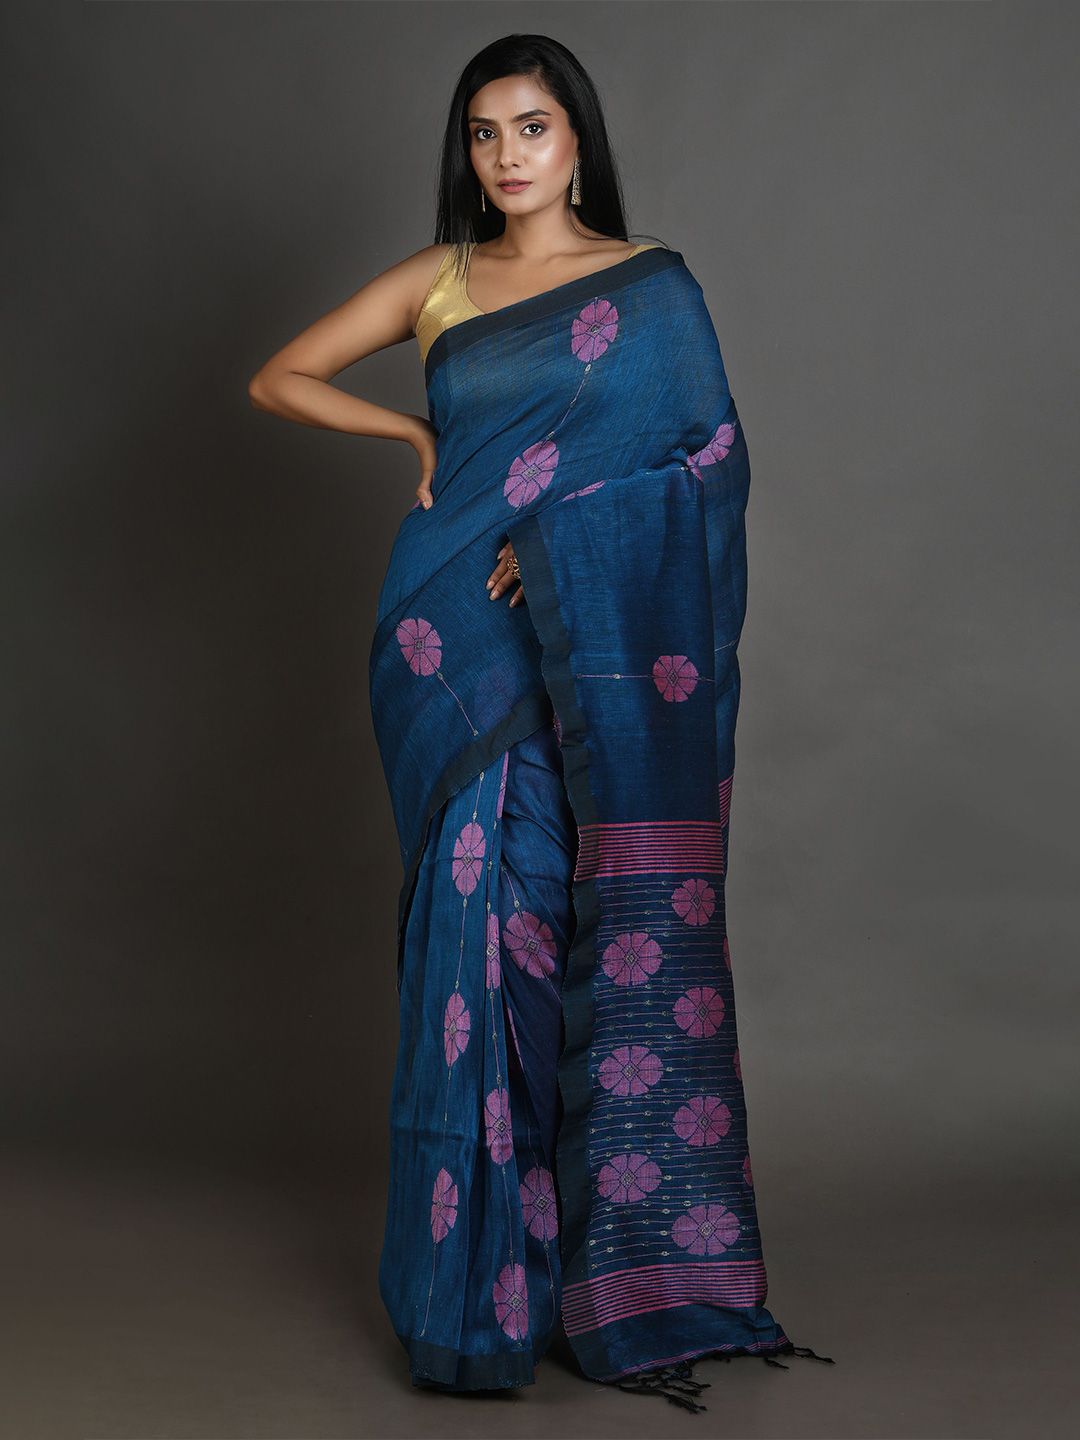 Arhi Blue & Pink Woven Design Pure Linen Saree Price in India